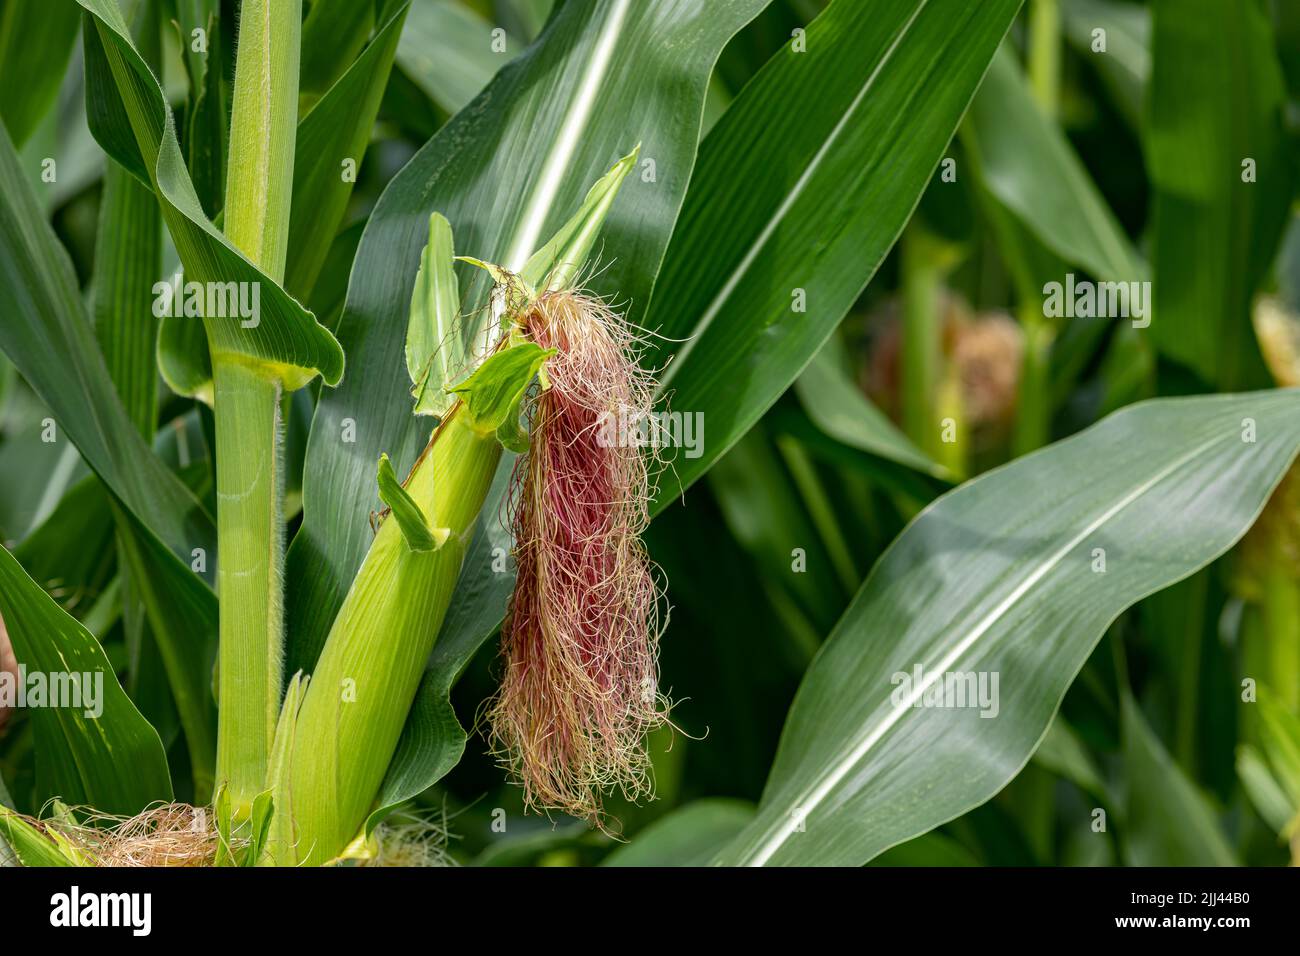 Campo de maíz con mazorcas de maíz y seda creciendo sobre tallos de maíz. Concepto de etanol, agricultura y agricultura Foto de stock